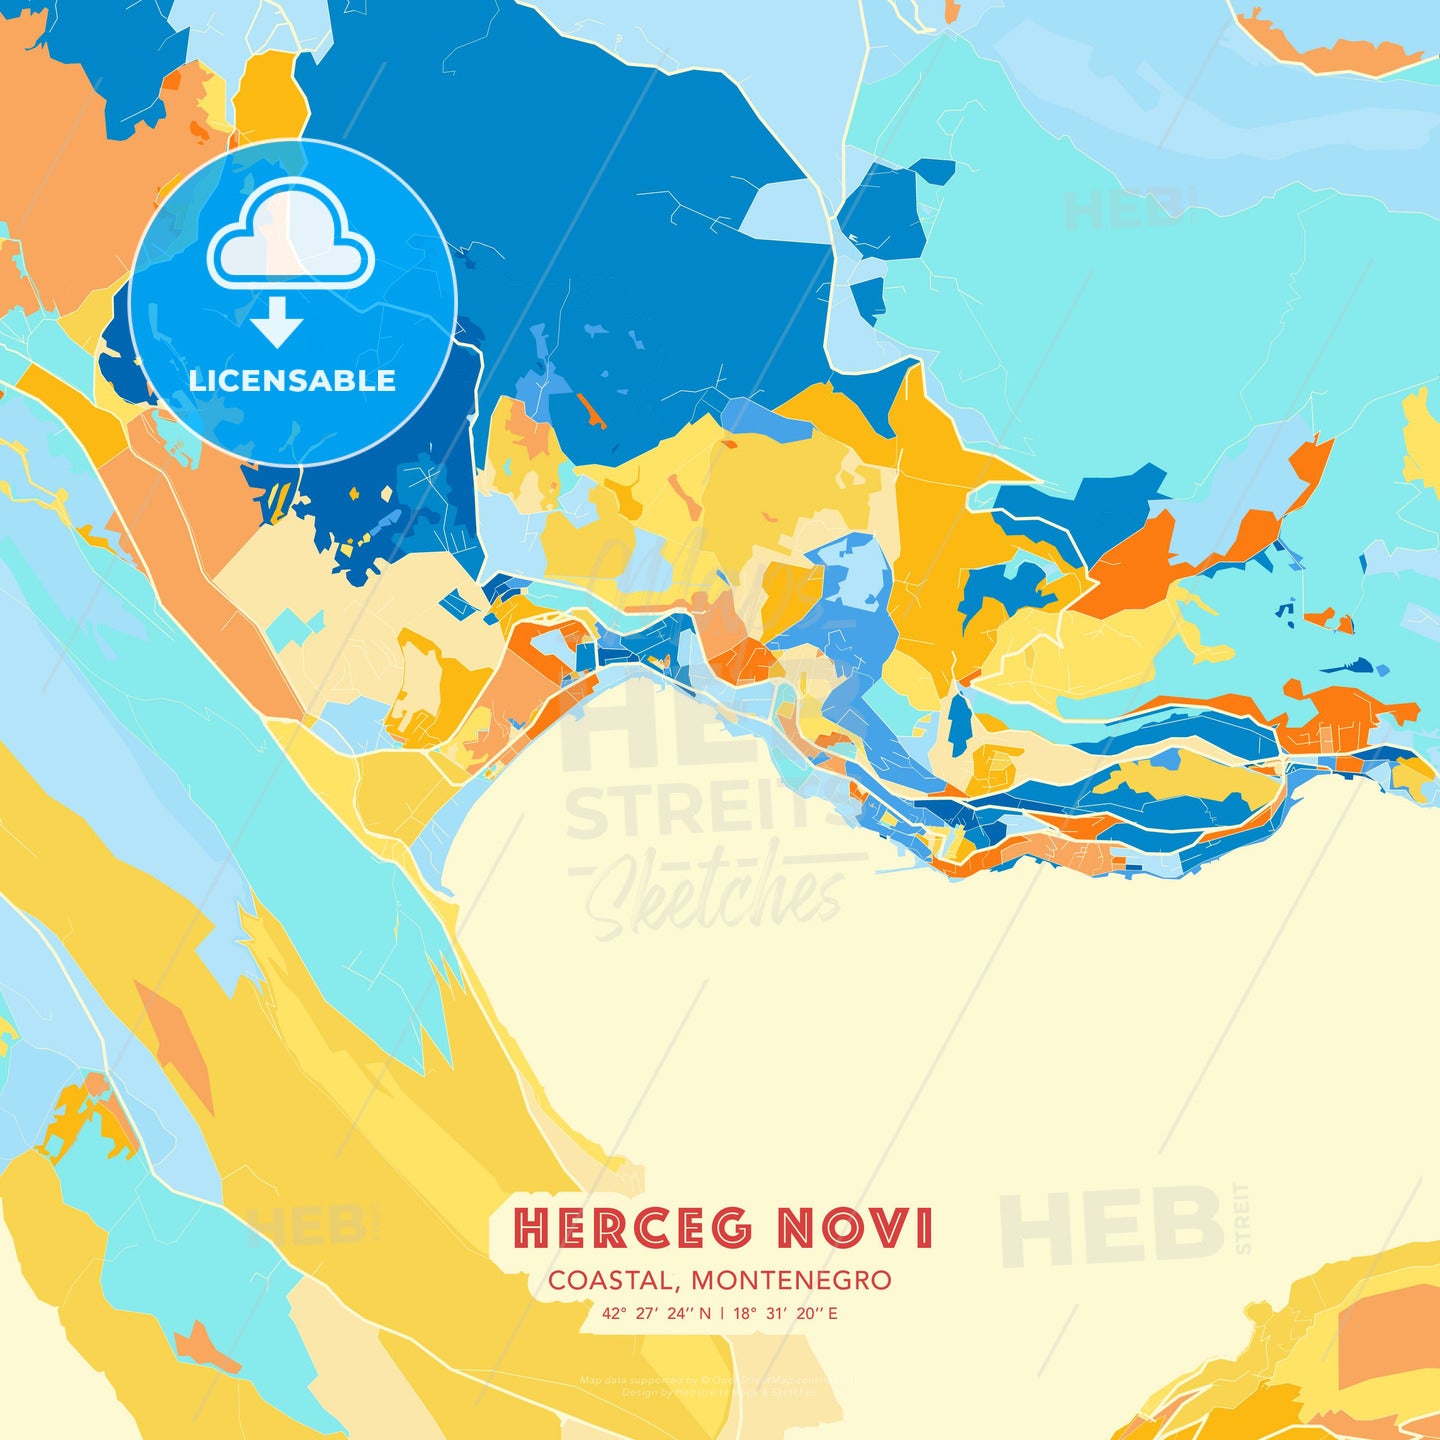 Herceg Novi, Coastal, Montenegro, map - HEBSTREITS Sketches